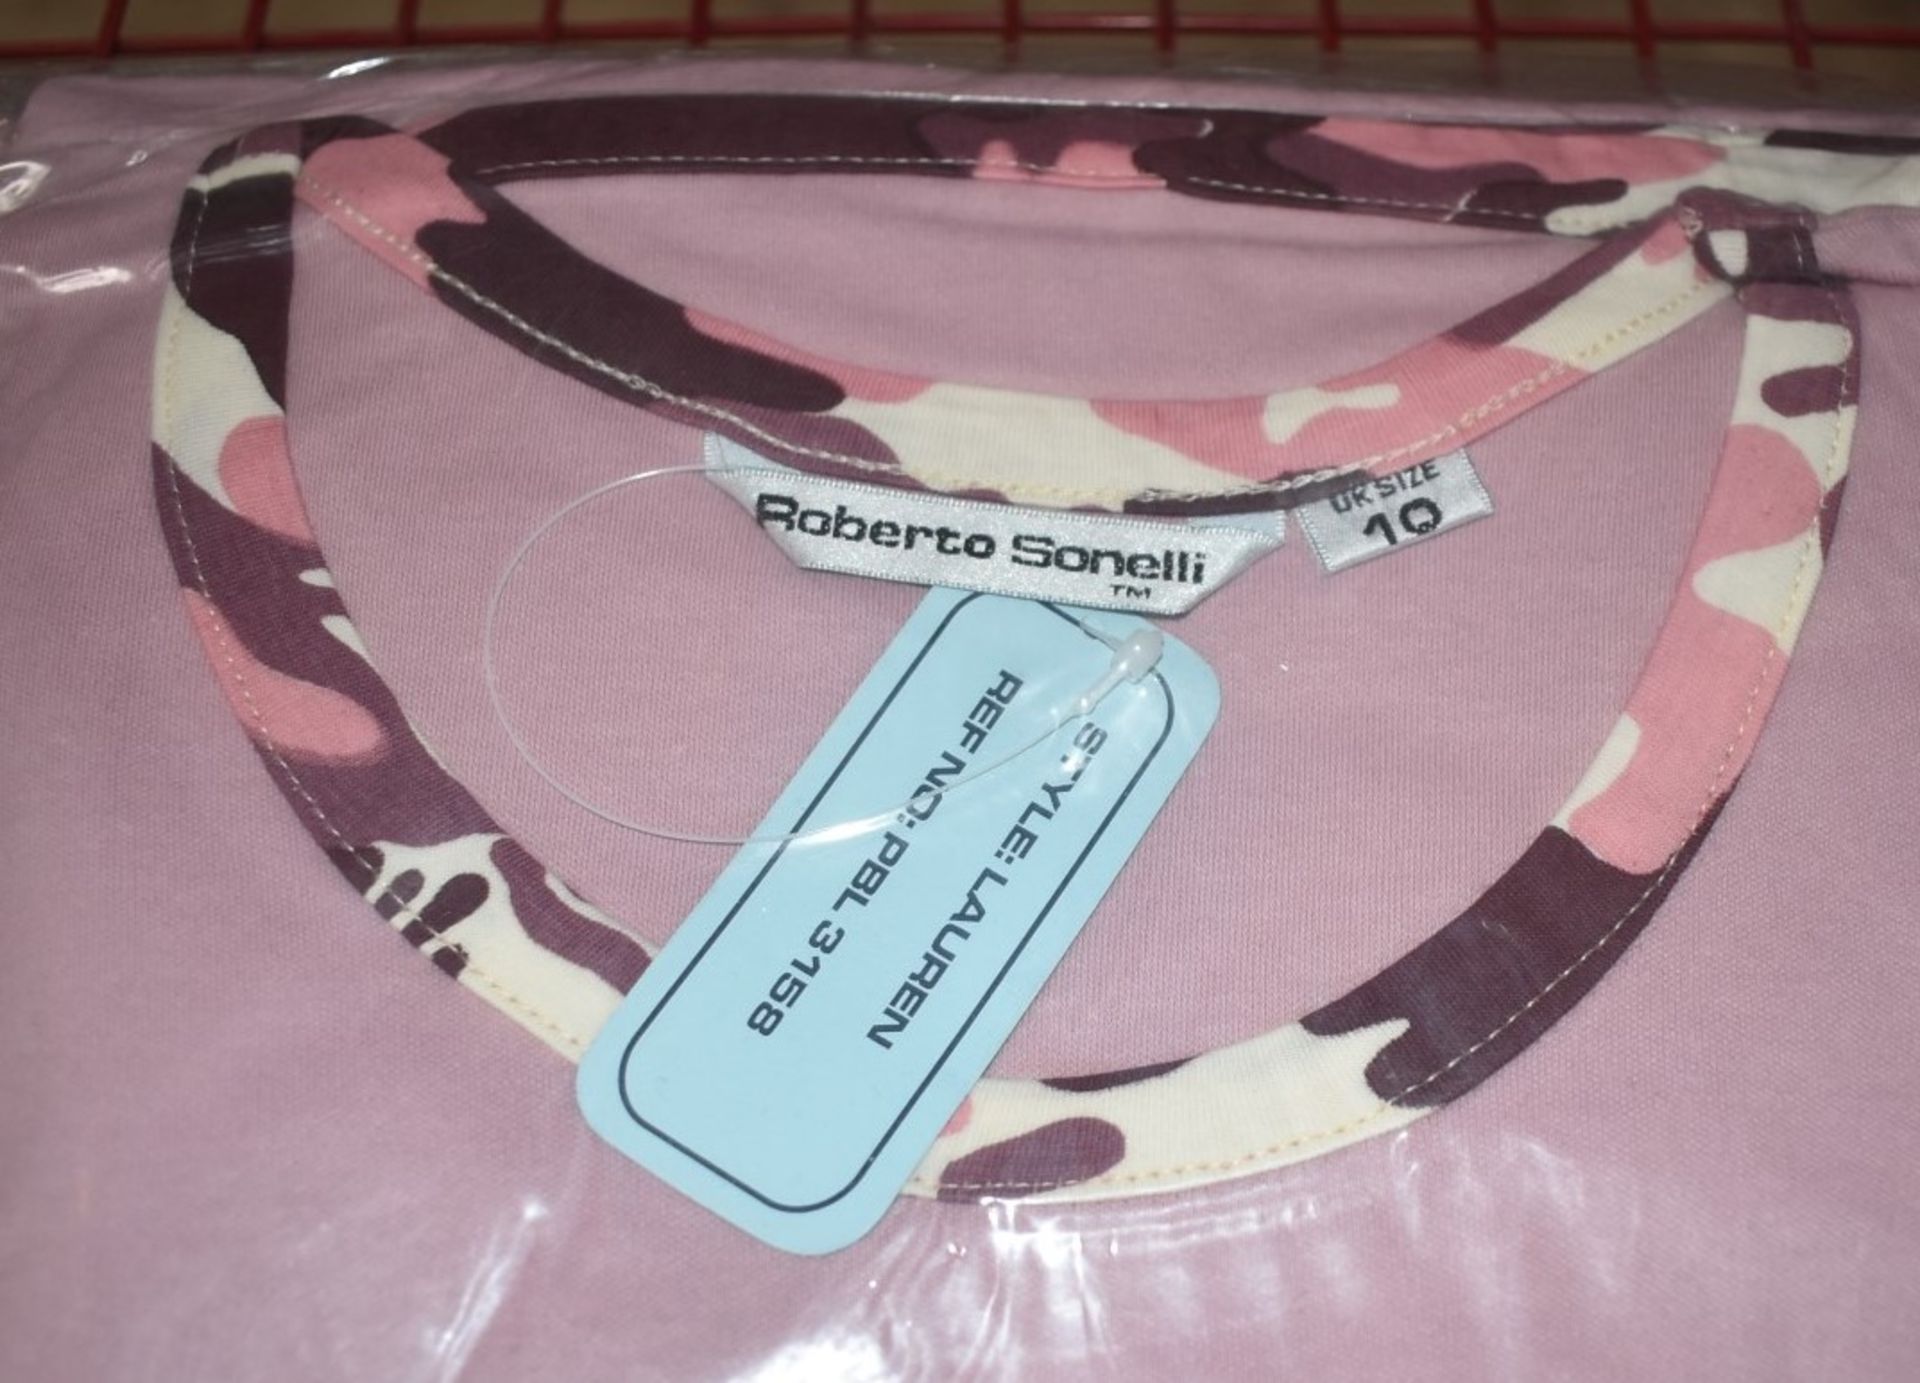 12 x Roberto Sonelli 'Lauren' Ladies Sleeveless Vests - Mauve/ Camouflage - New - Approx RRP £180 - Image 4 of 4